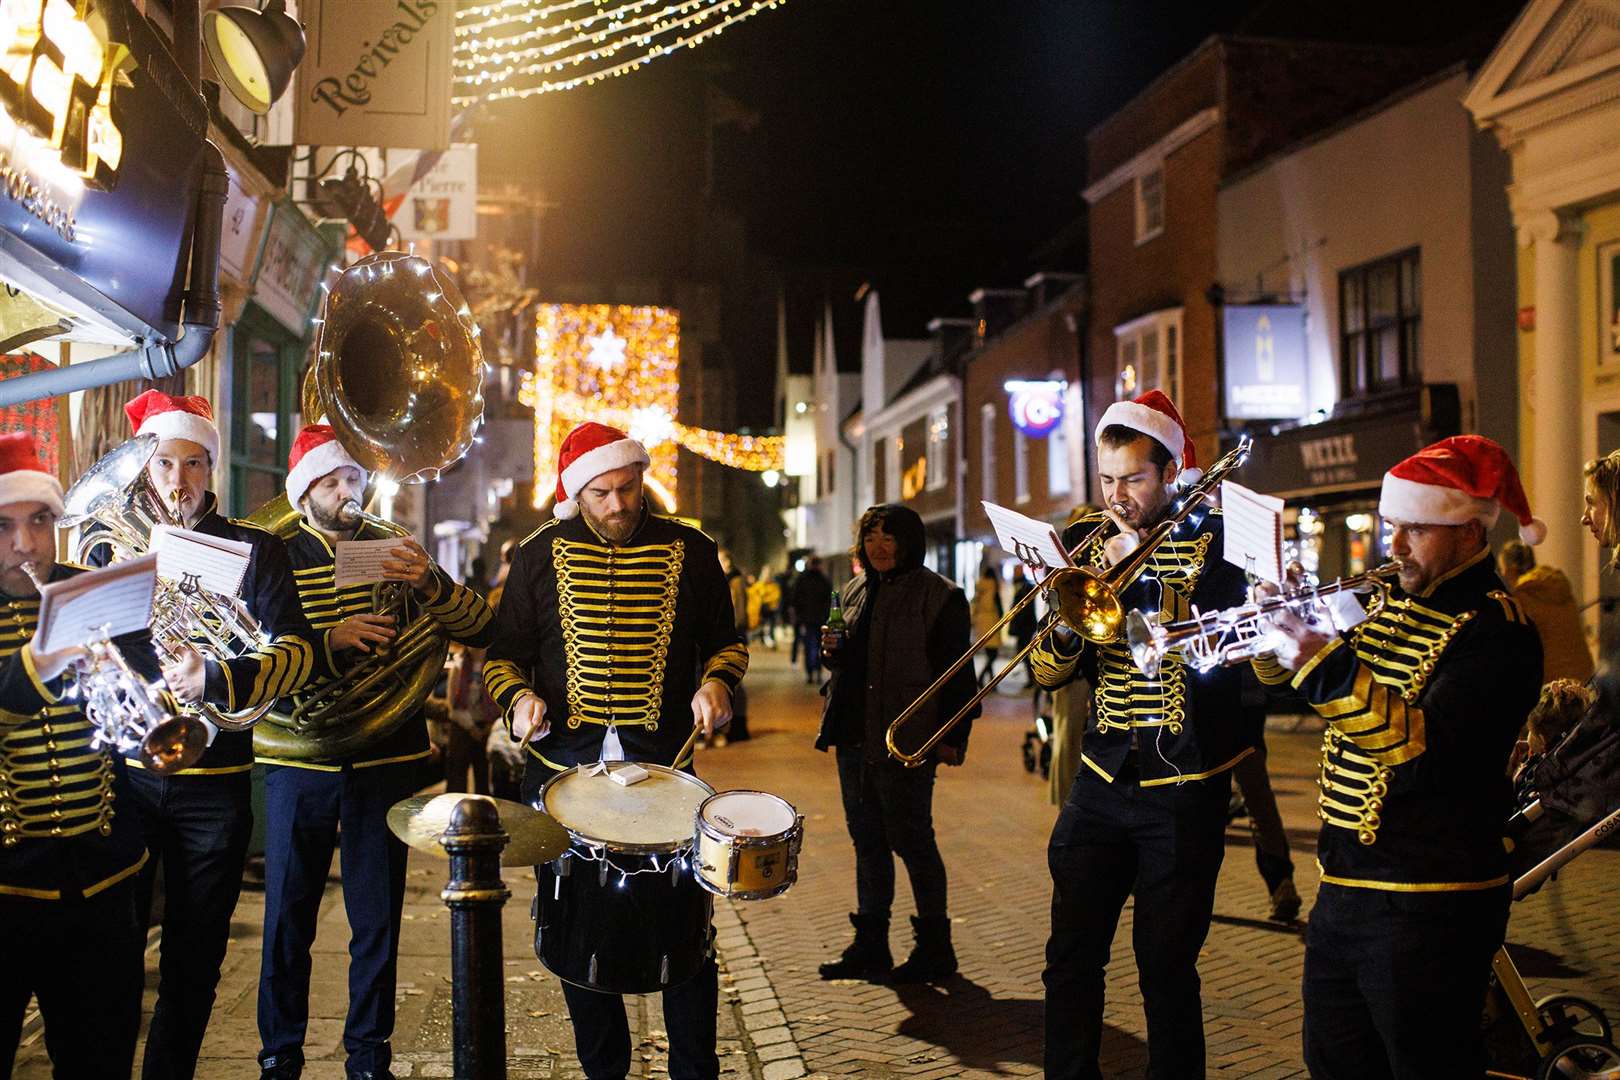 A band provided festive music. Picture: Canterbury BID/Matt Wilson